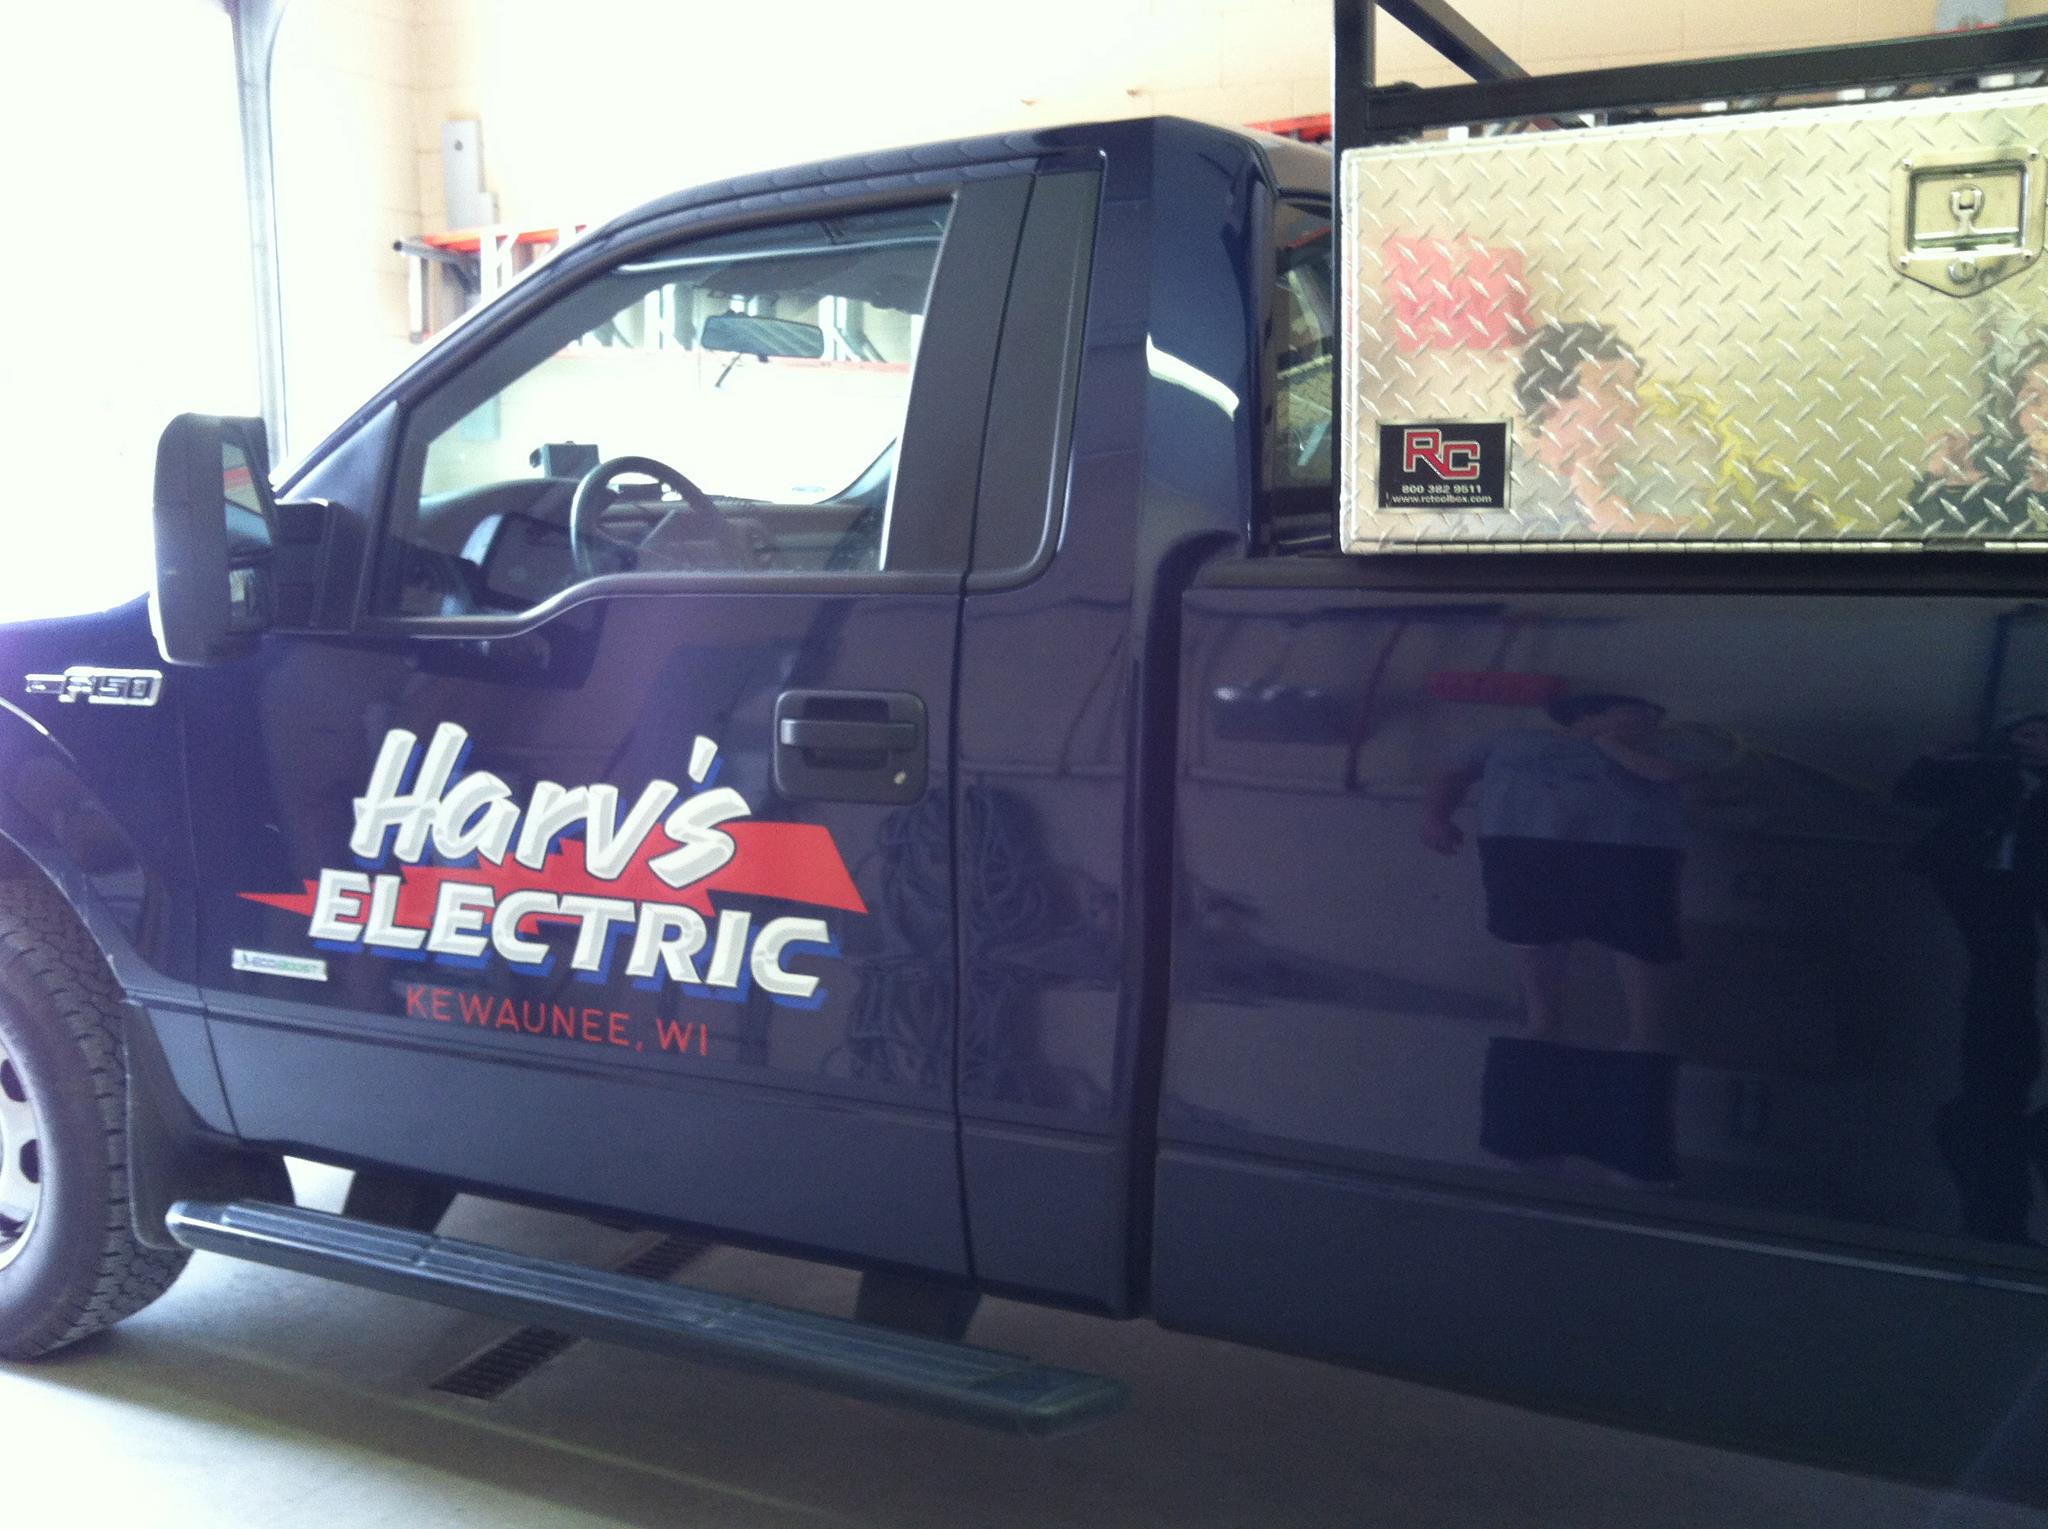 Harv's Electric Services 401 Milwaukee St #1095, Kewaunee Wisconsin 54216